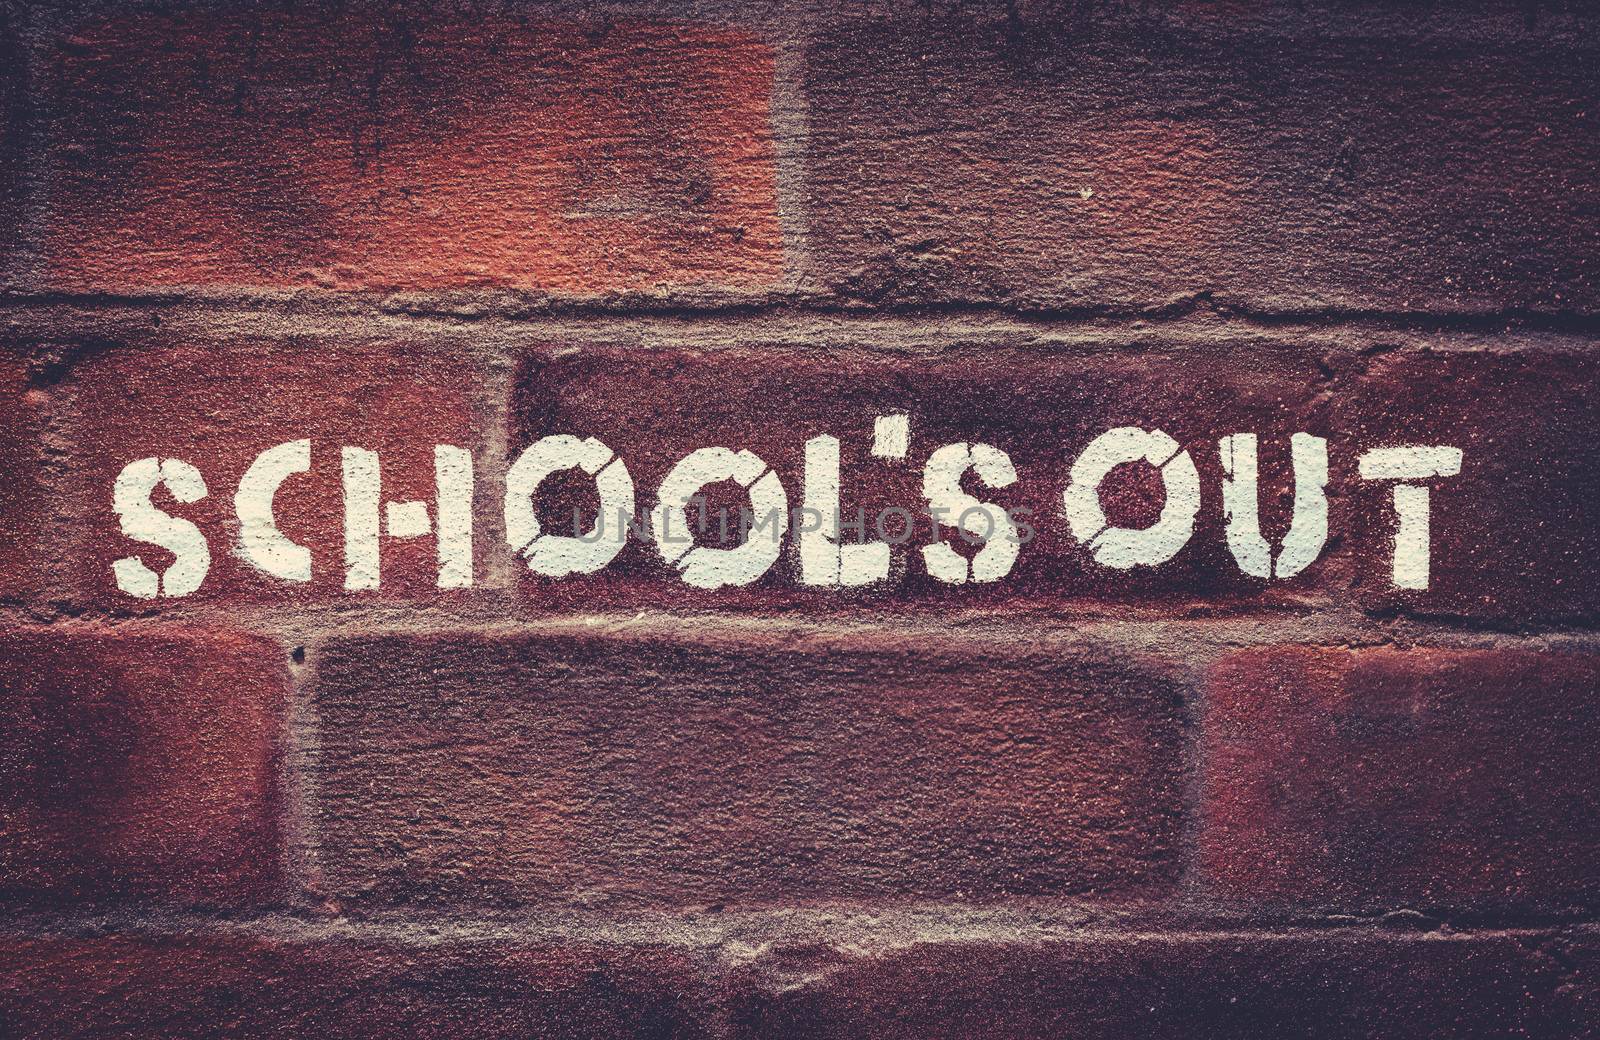 Urban School's Out Stencil Graffiti On A Red Brick Wall